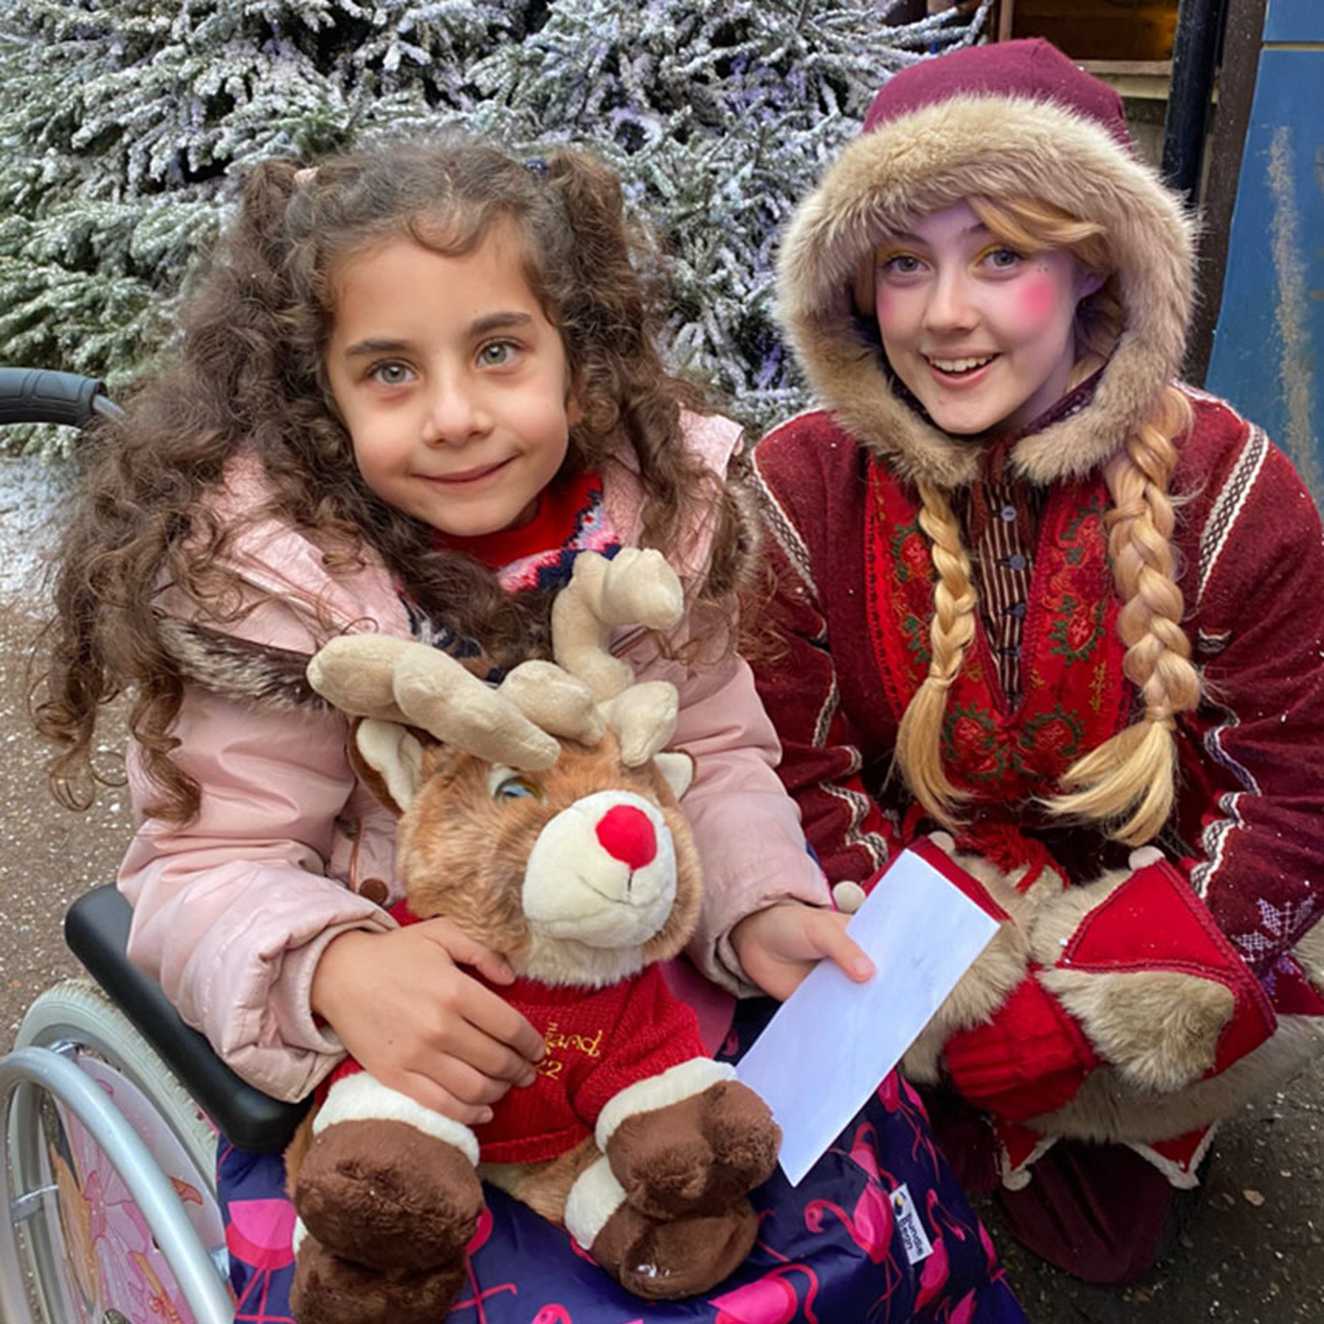 Riziah meeting one of Santa's helpers at Lapland UK.